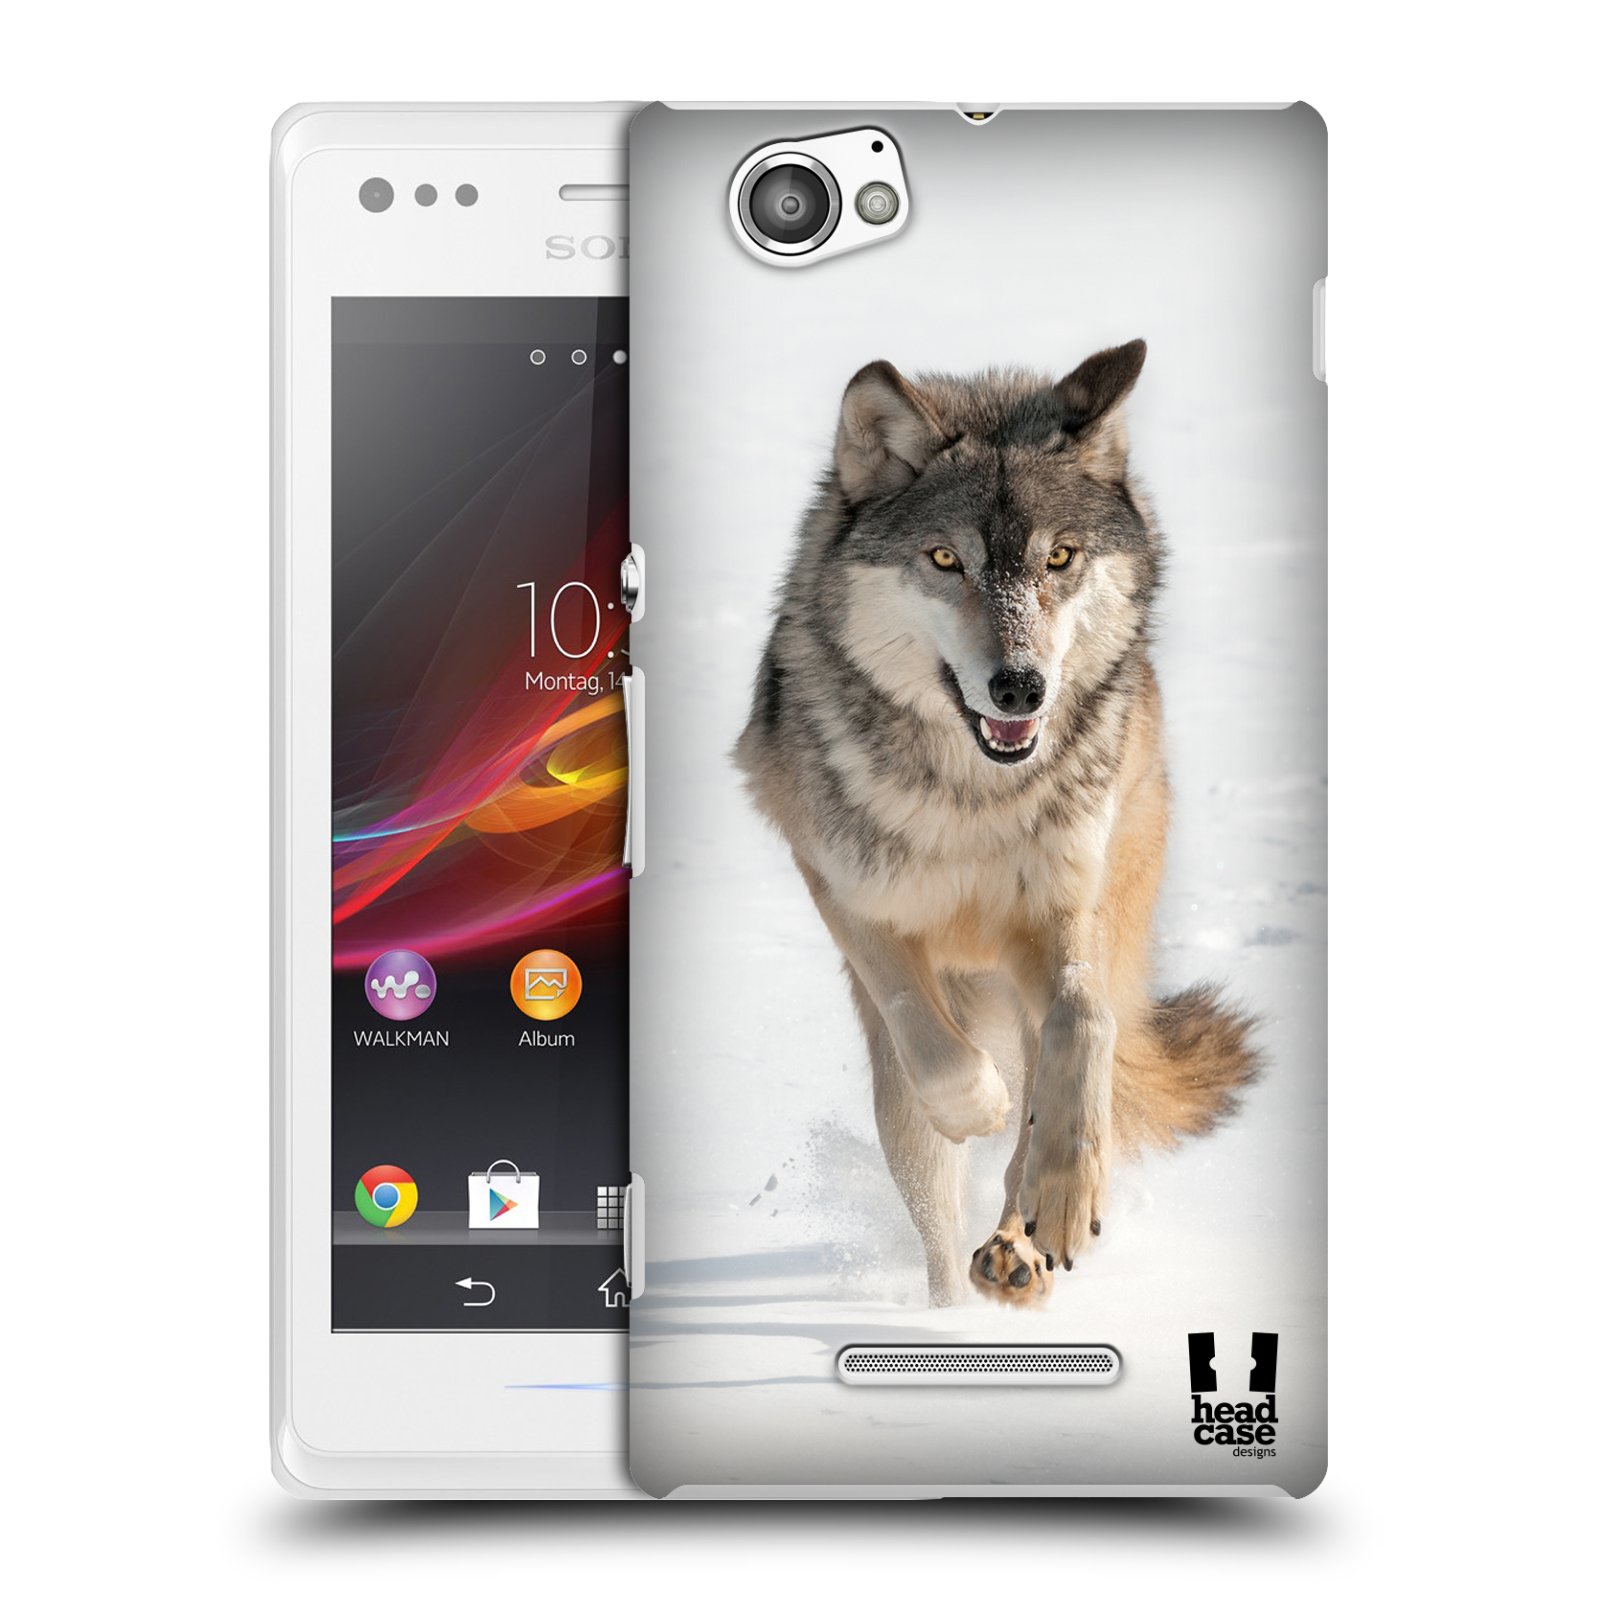 HEAD CASE plastový obal na mobil Sony Xperia M vzor Divočina, Divoký život a zvířata foto BĚŽÍCÍ VLK